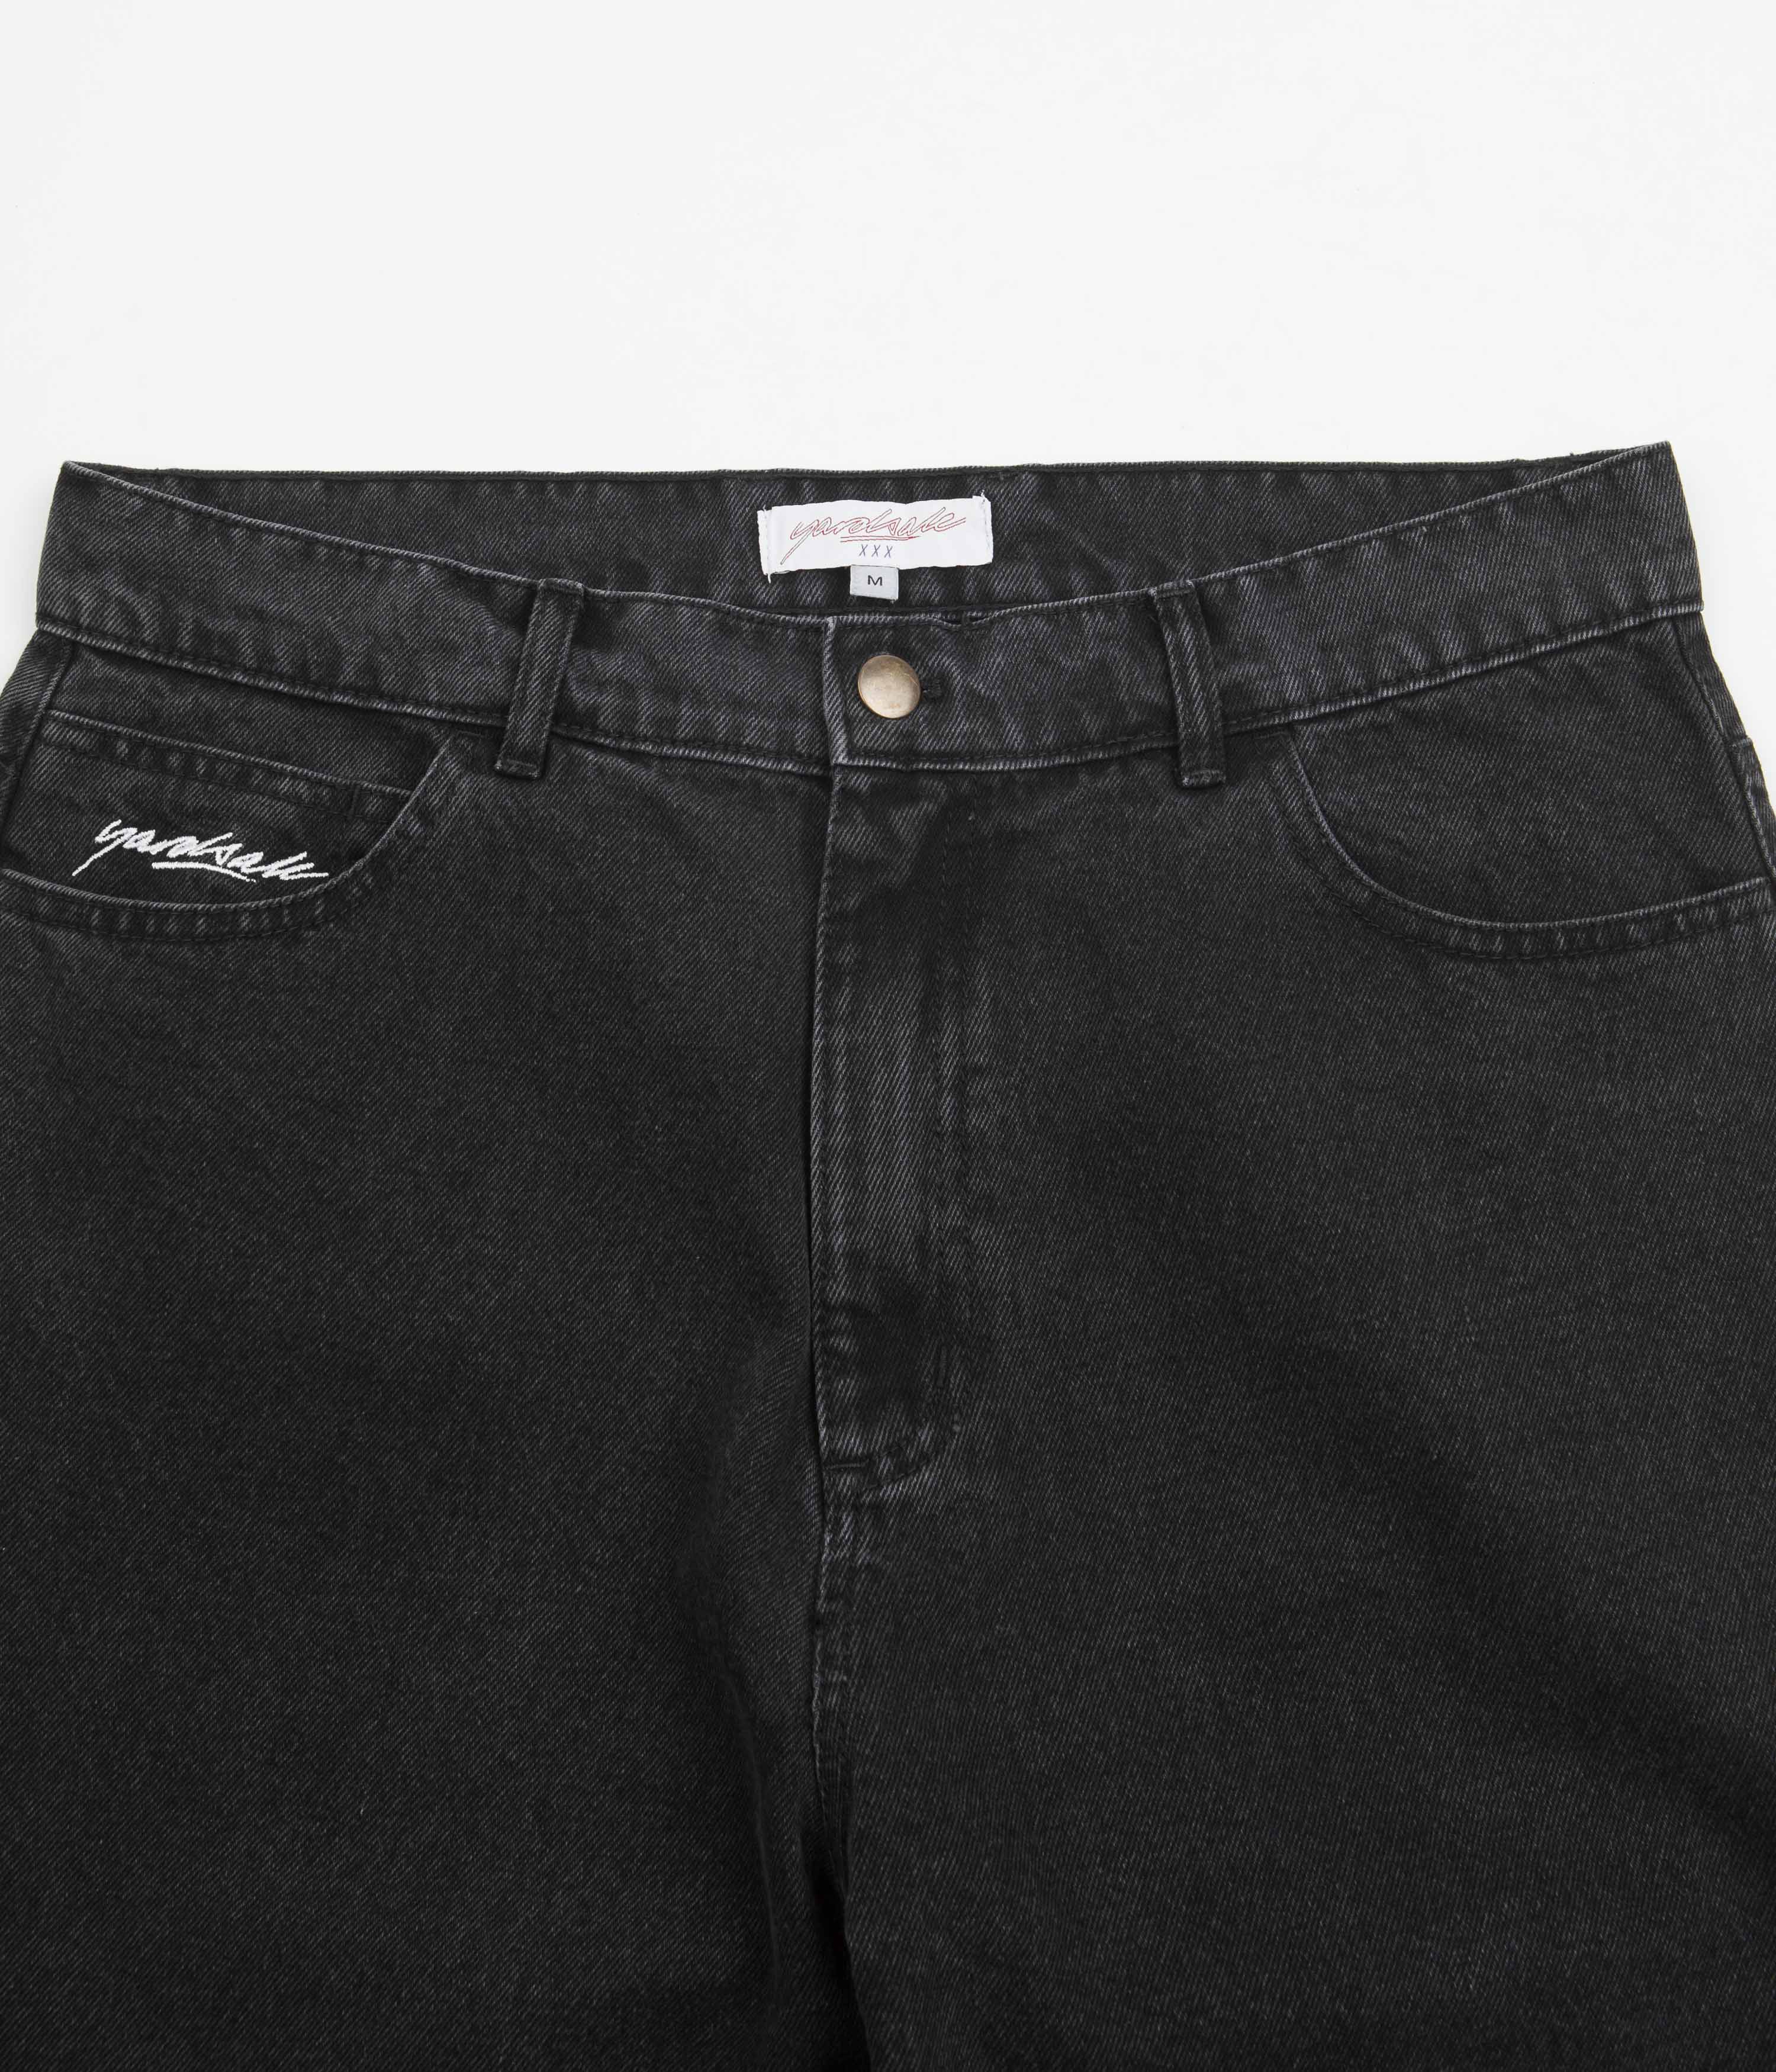 Yardsale Phantasy Jeans black+spbgp44.ru